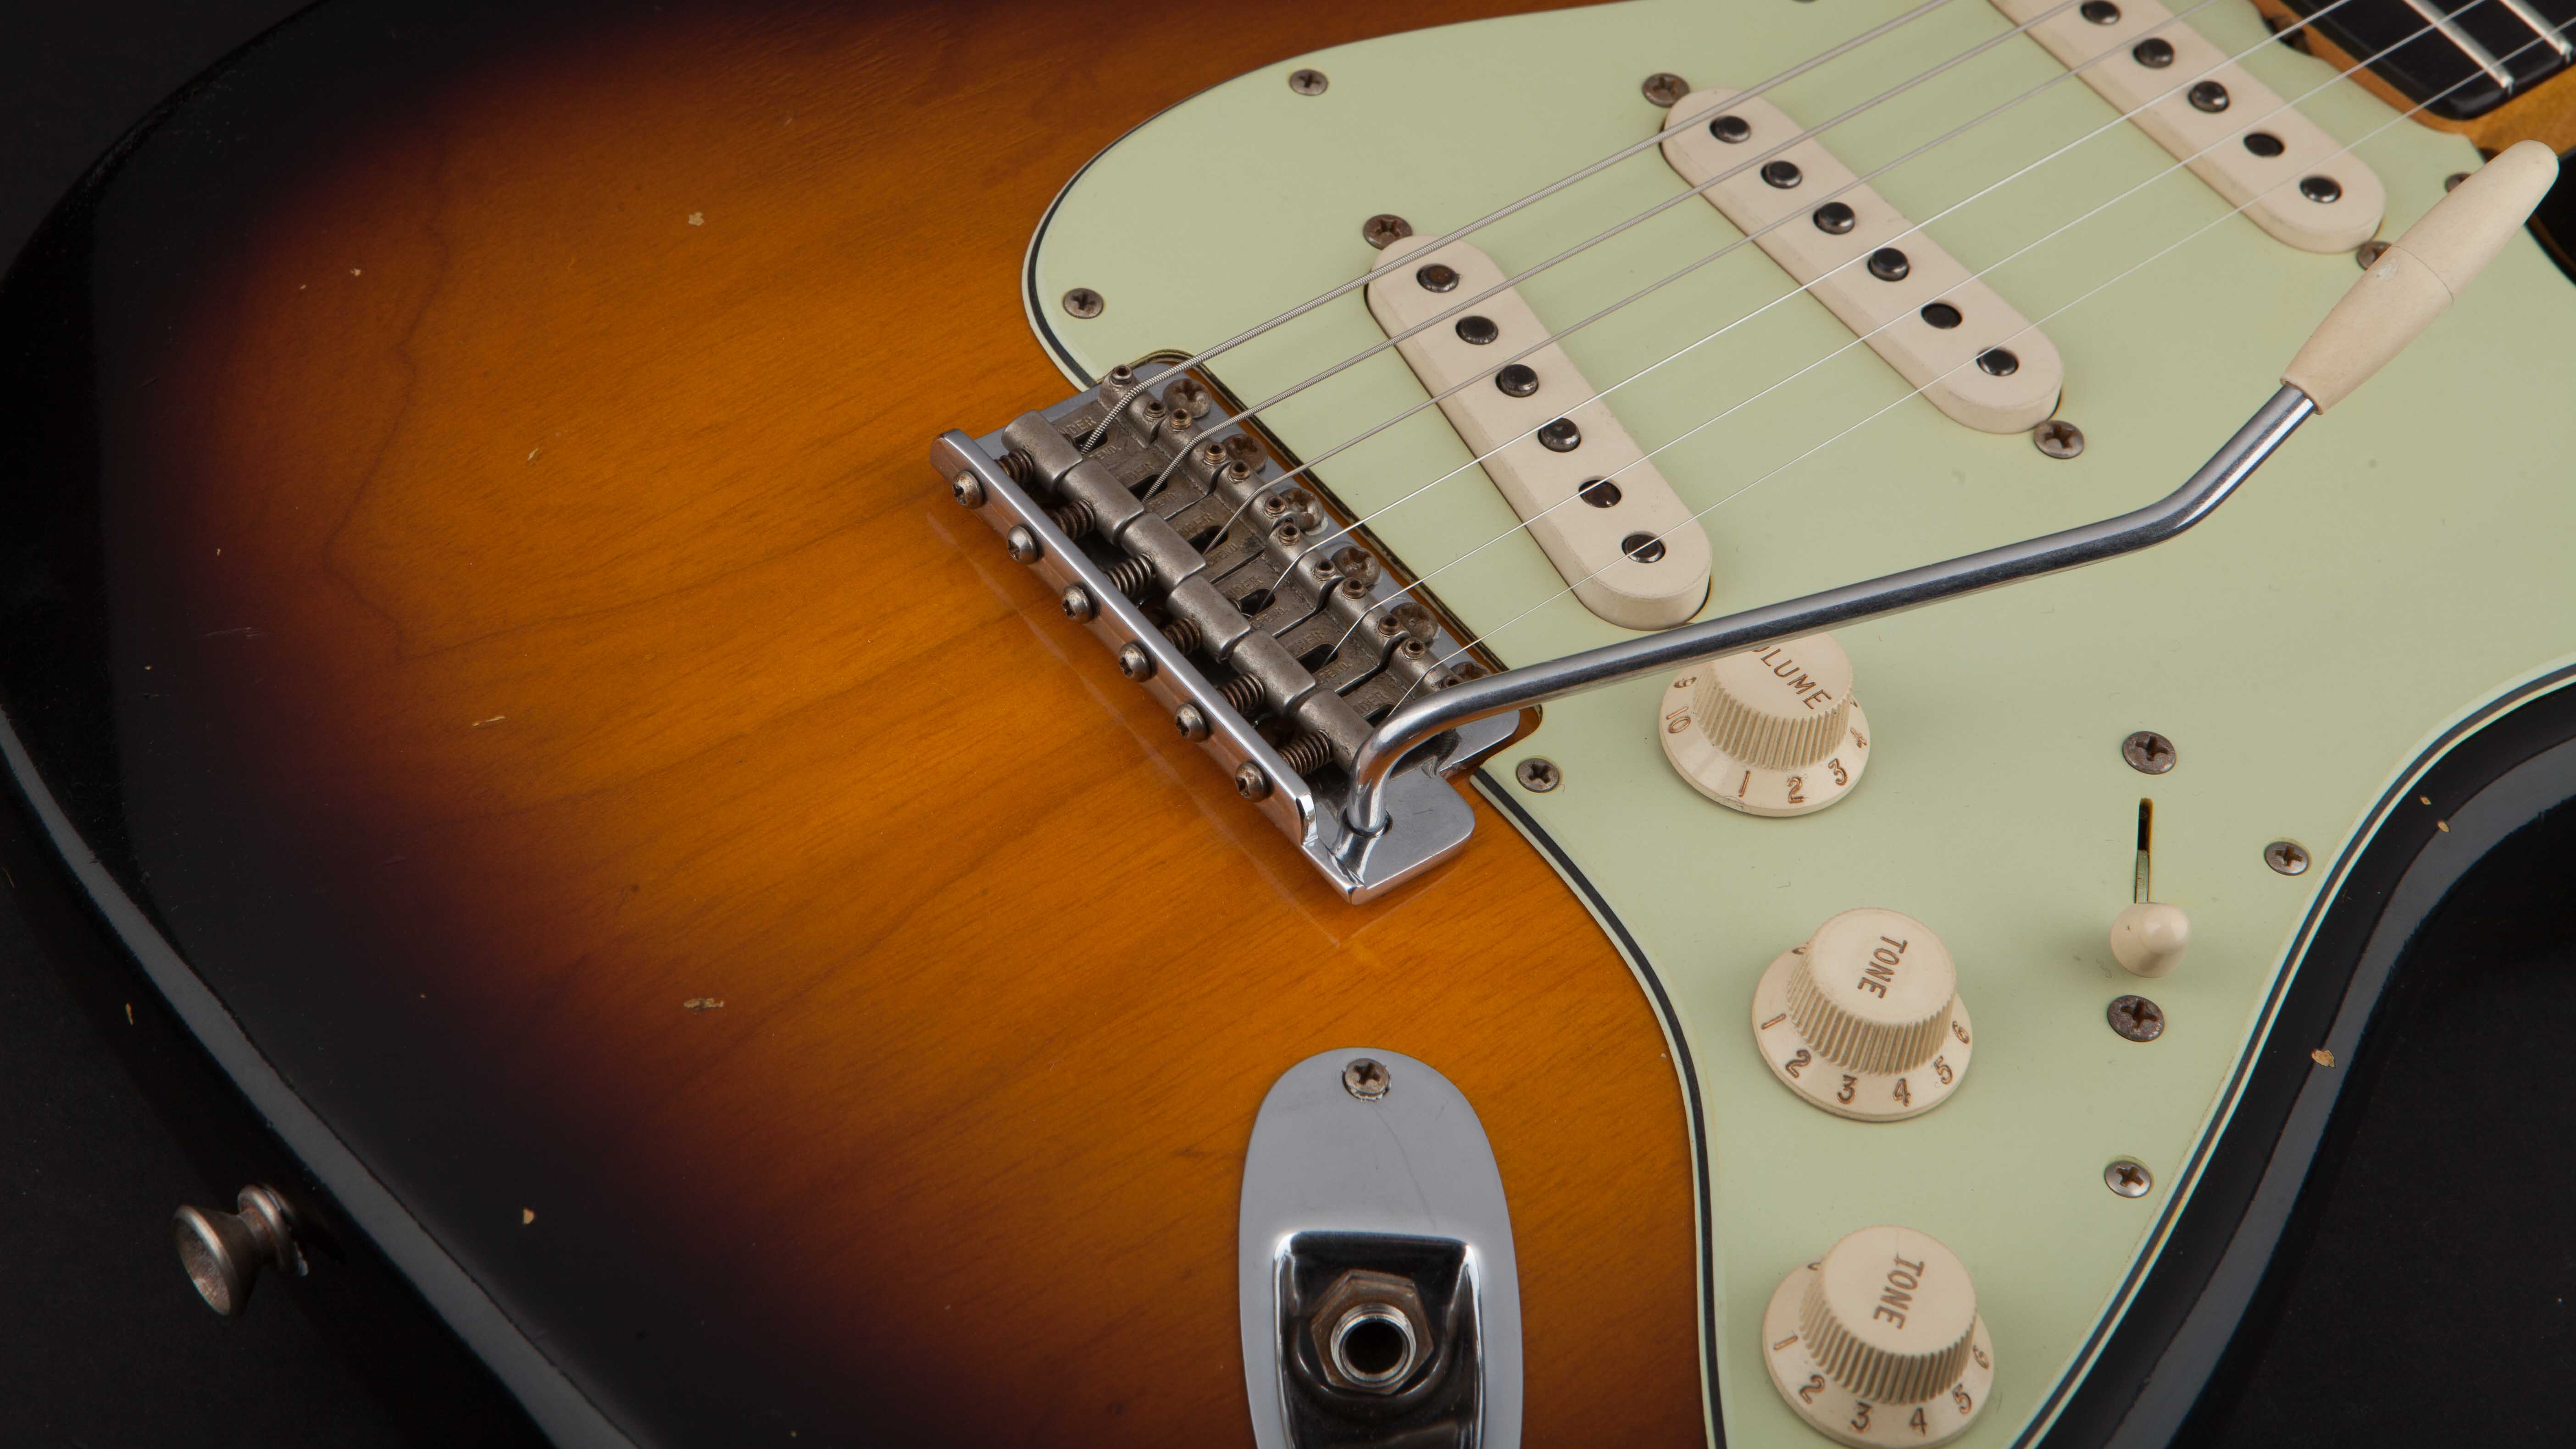 Fender Custom Shop Stratocaster 62 2 Tone Sunburst Ash Body #R85001